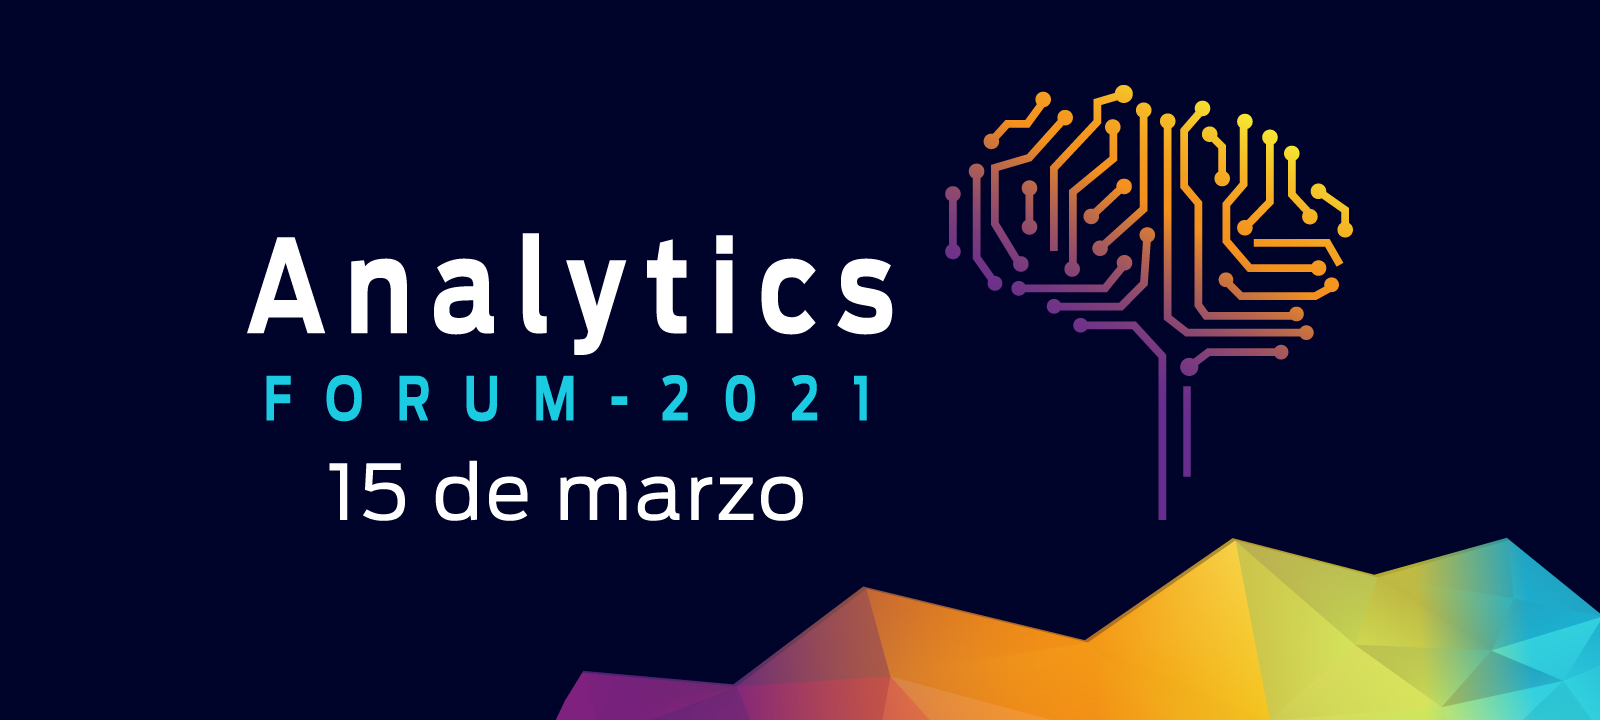 Analytics Forum 2021